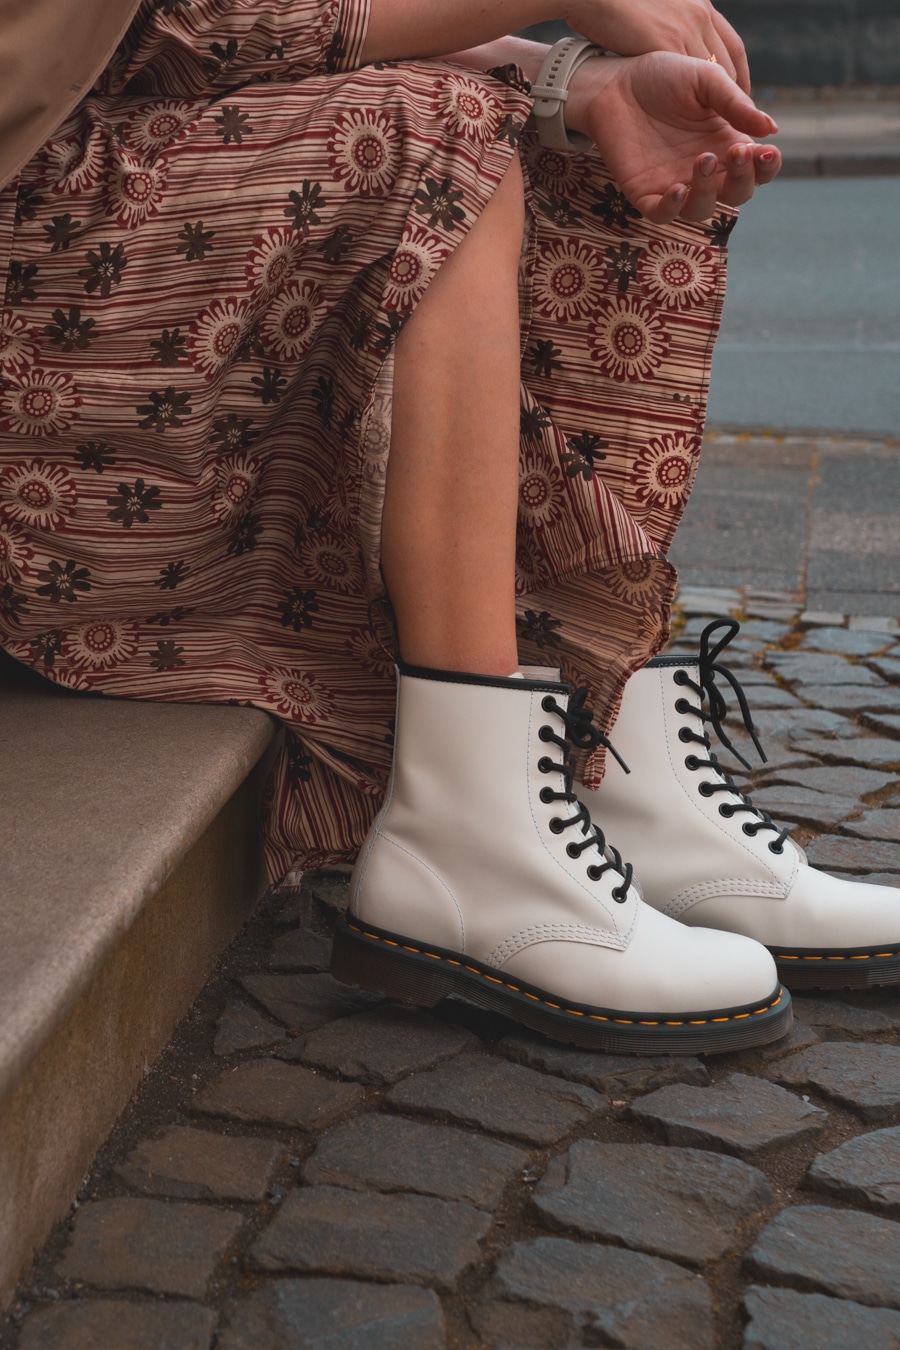 Outfit Inspo - Maxikleid mit weißen Dr. Martens Boots kombinieren